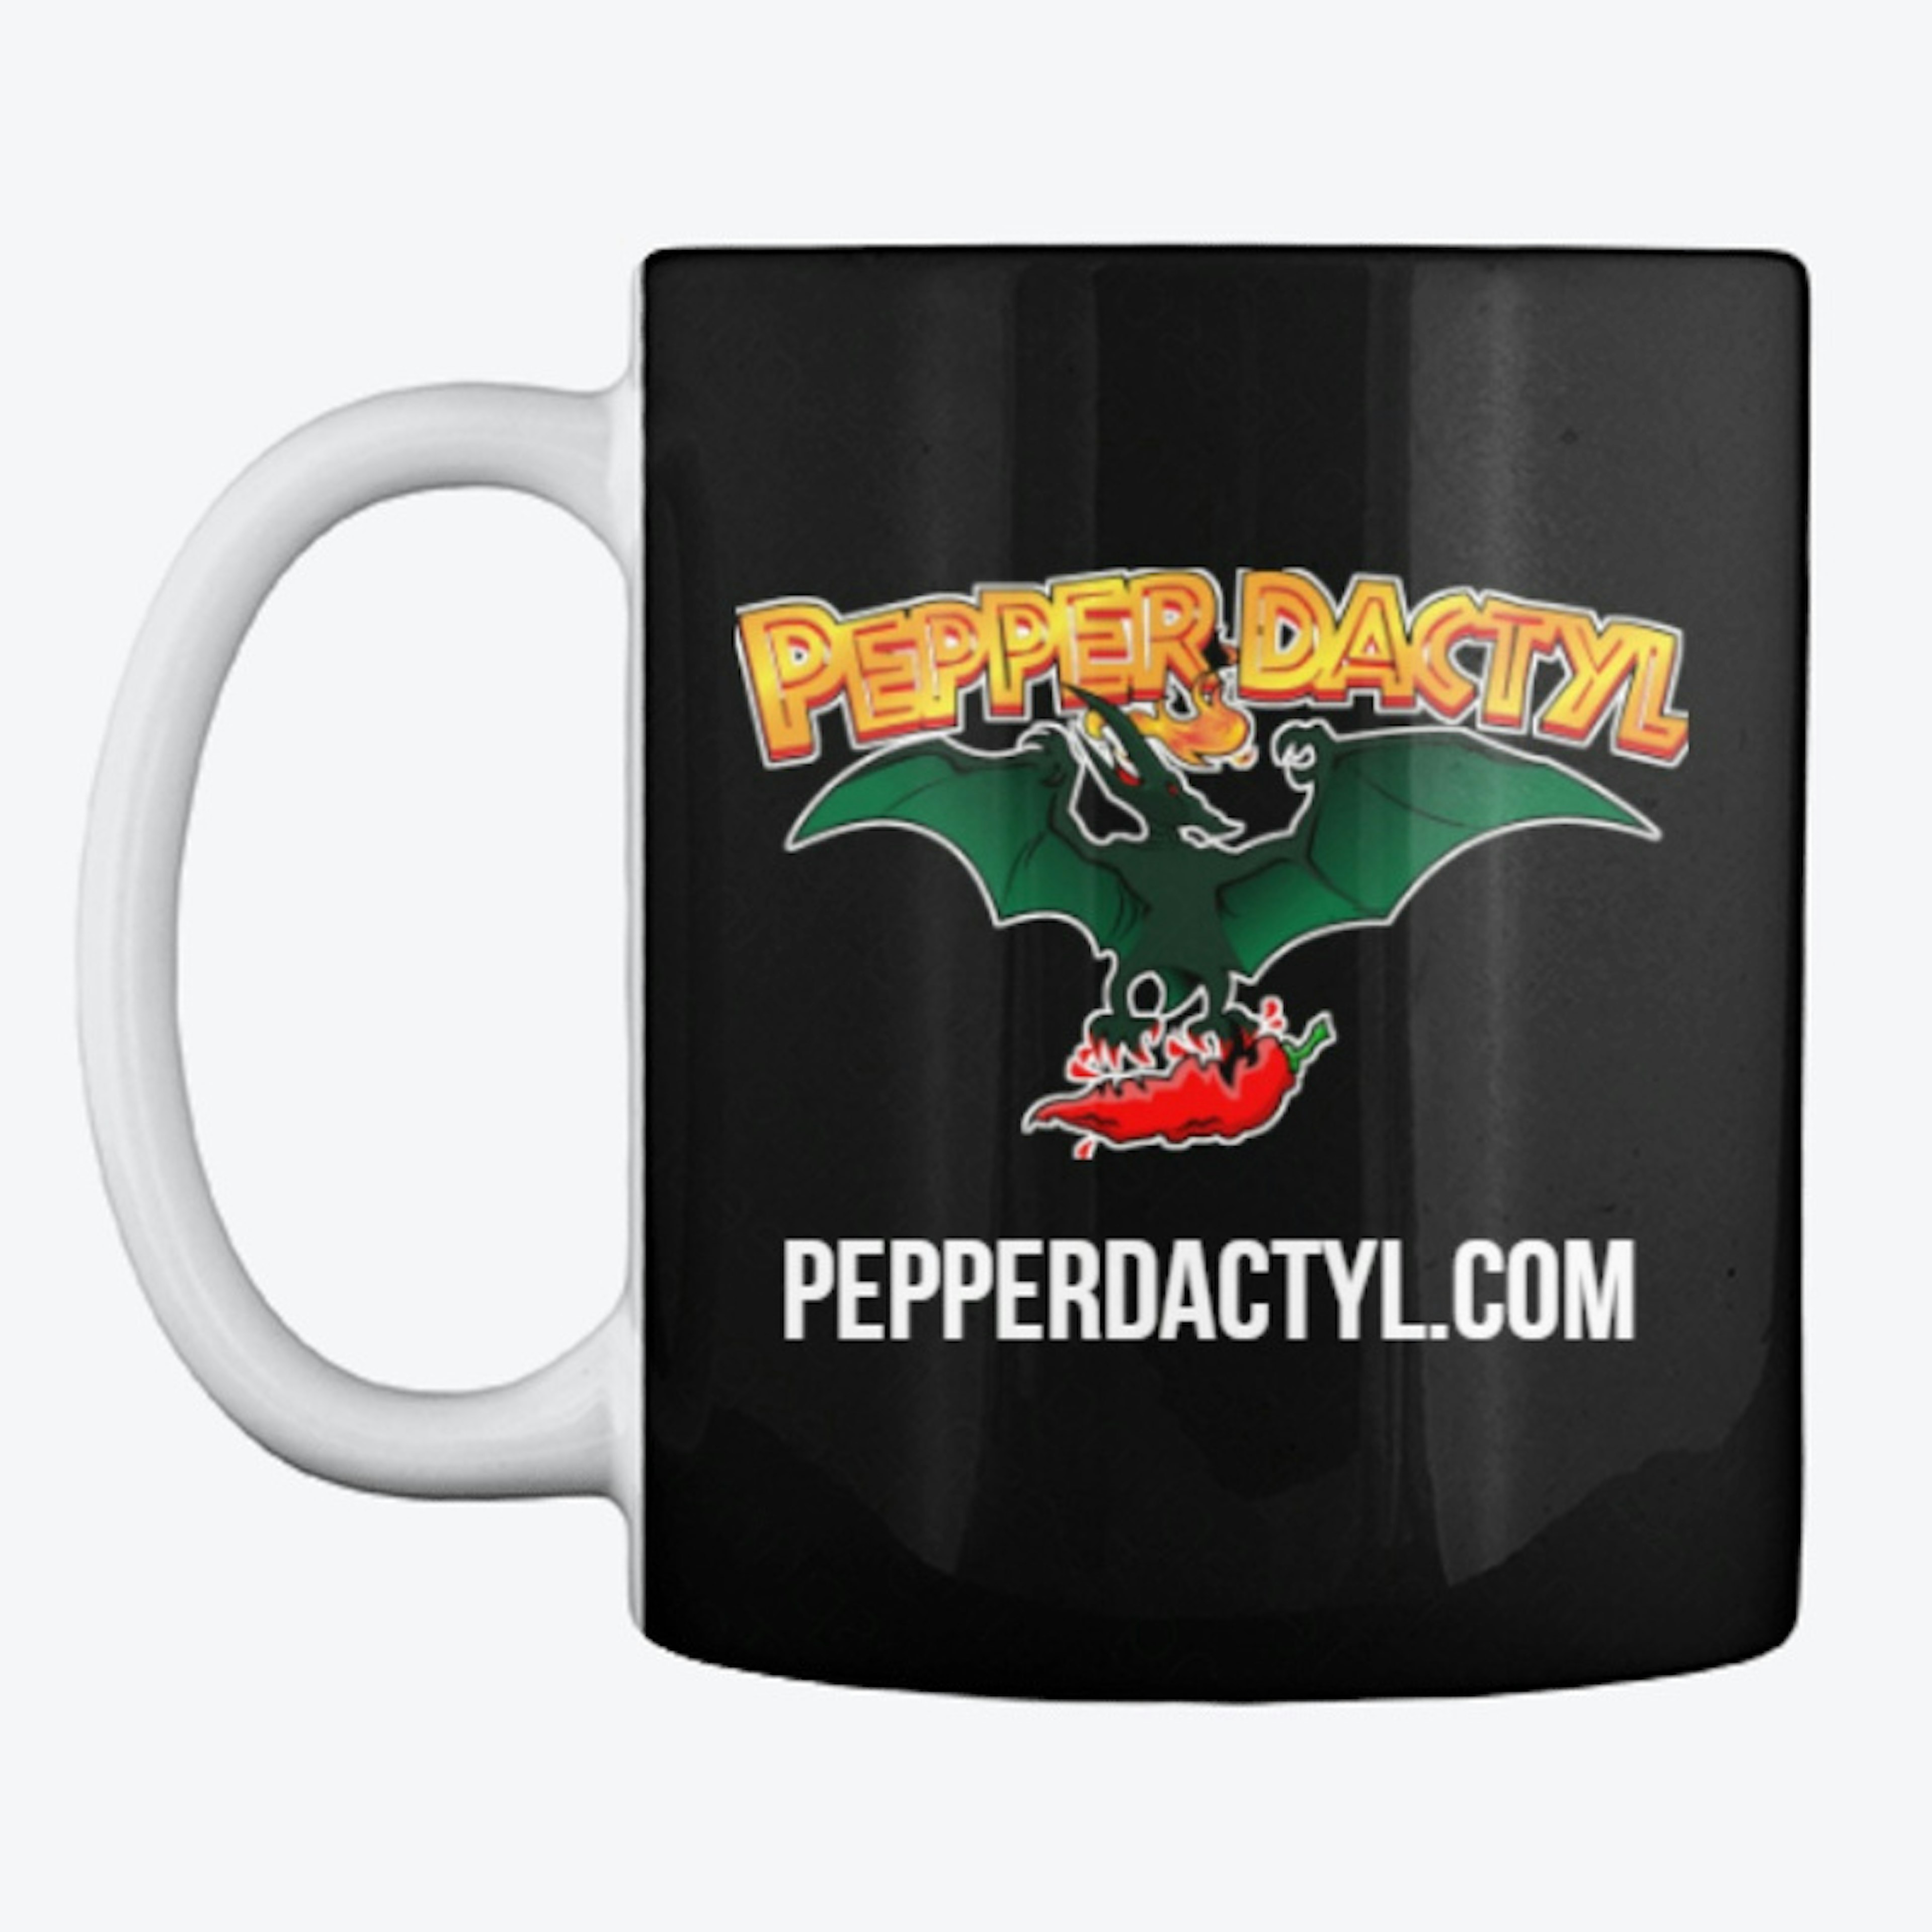 PepperDactyl Mug, Black